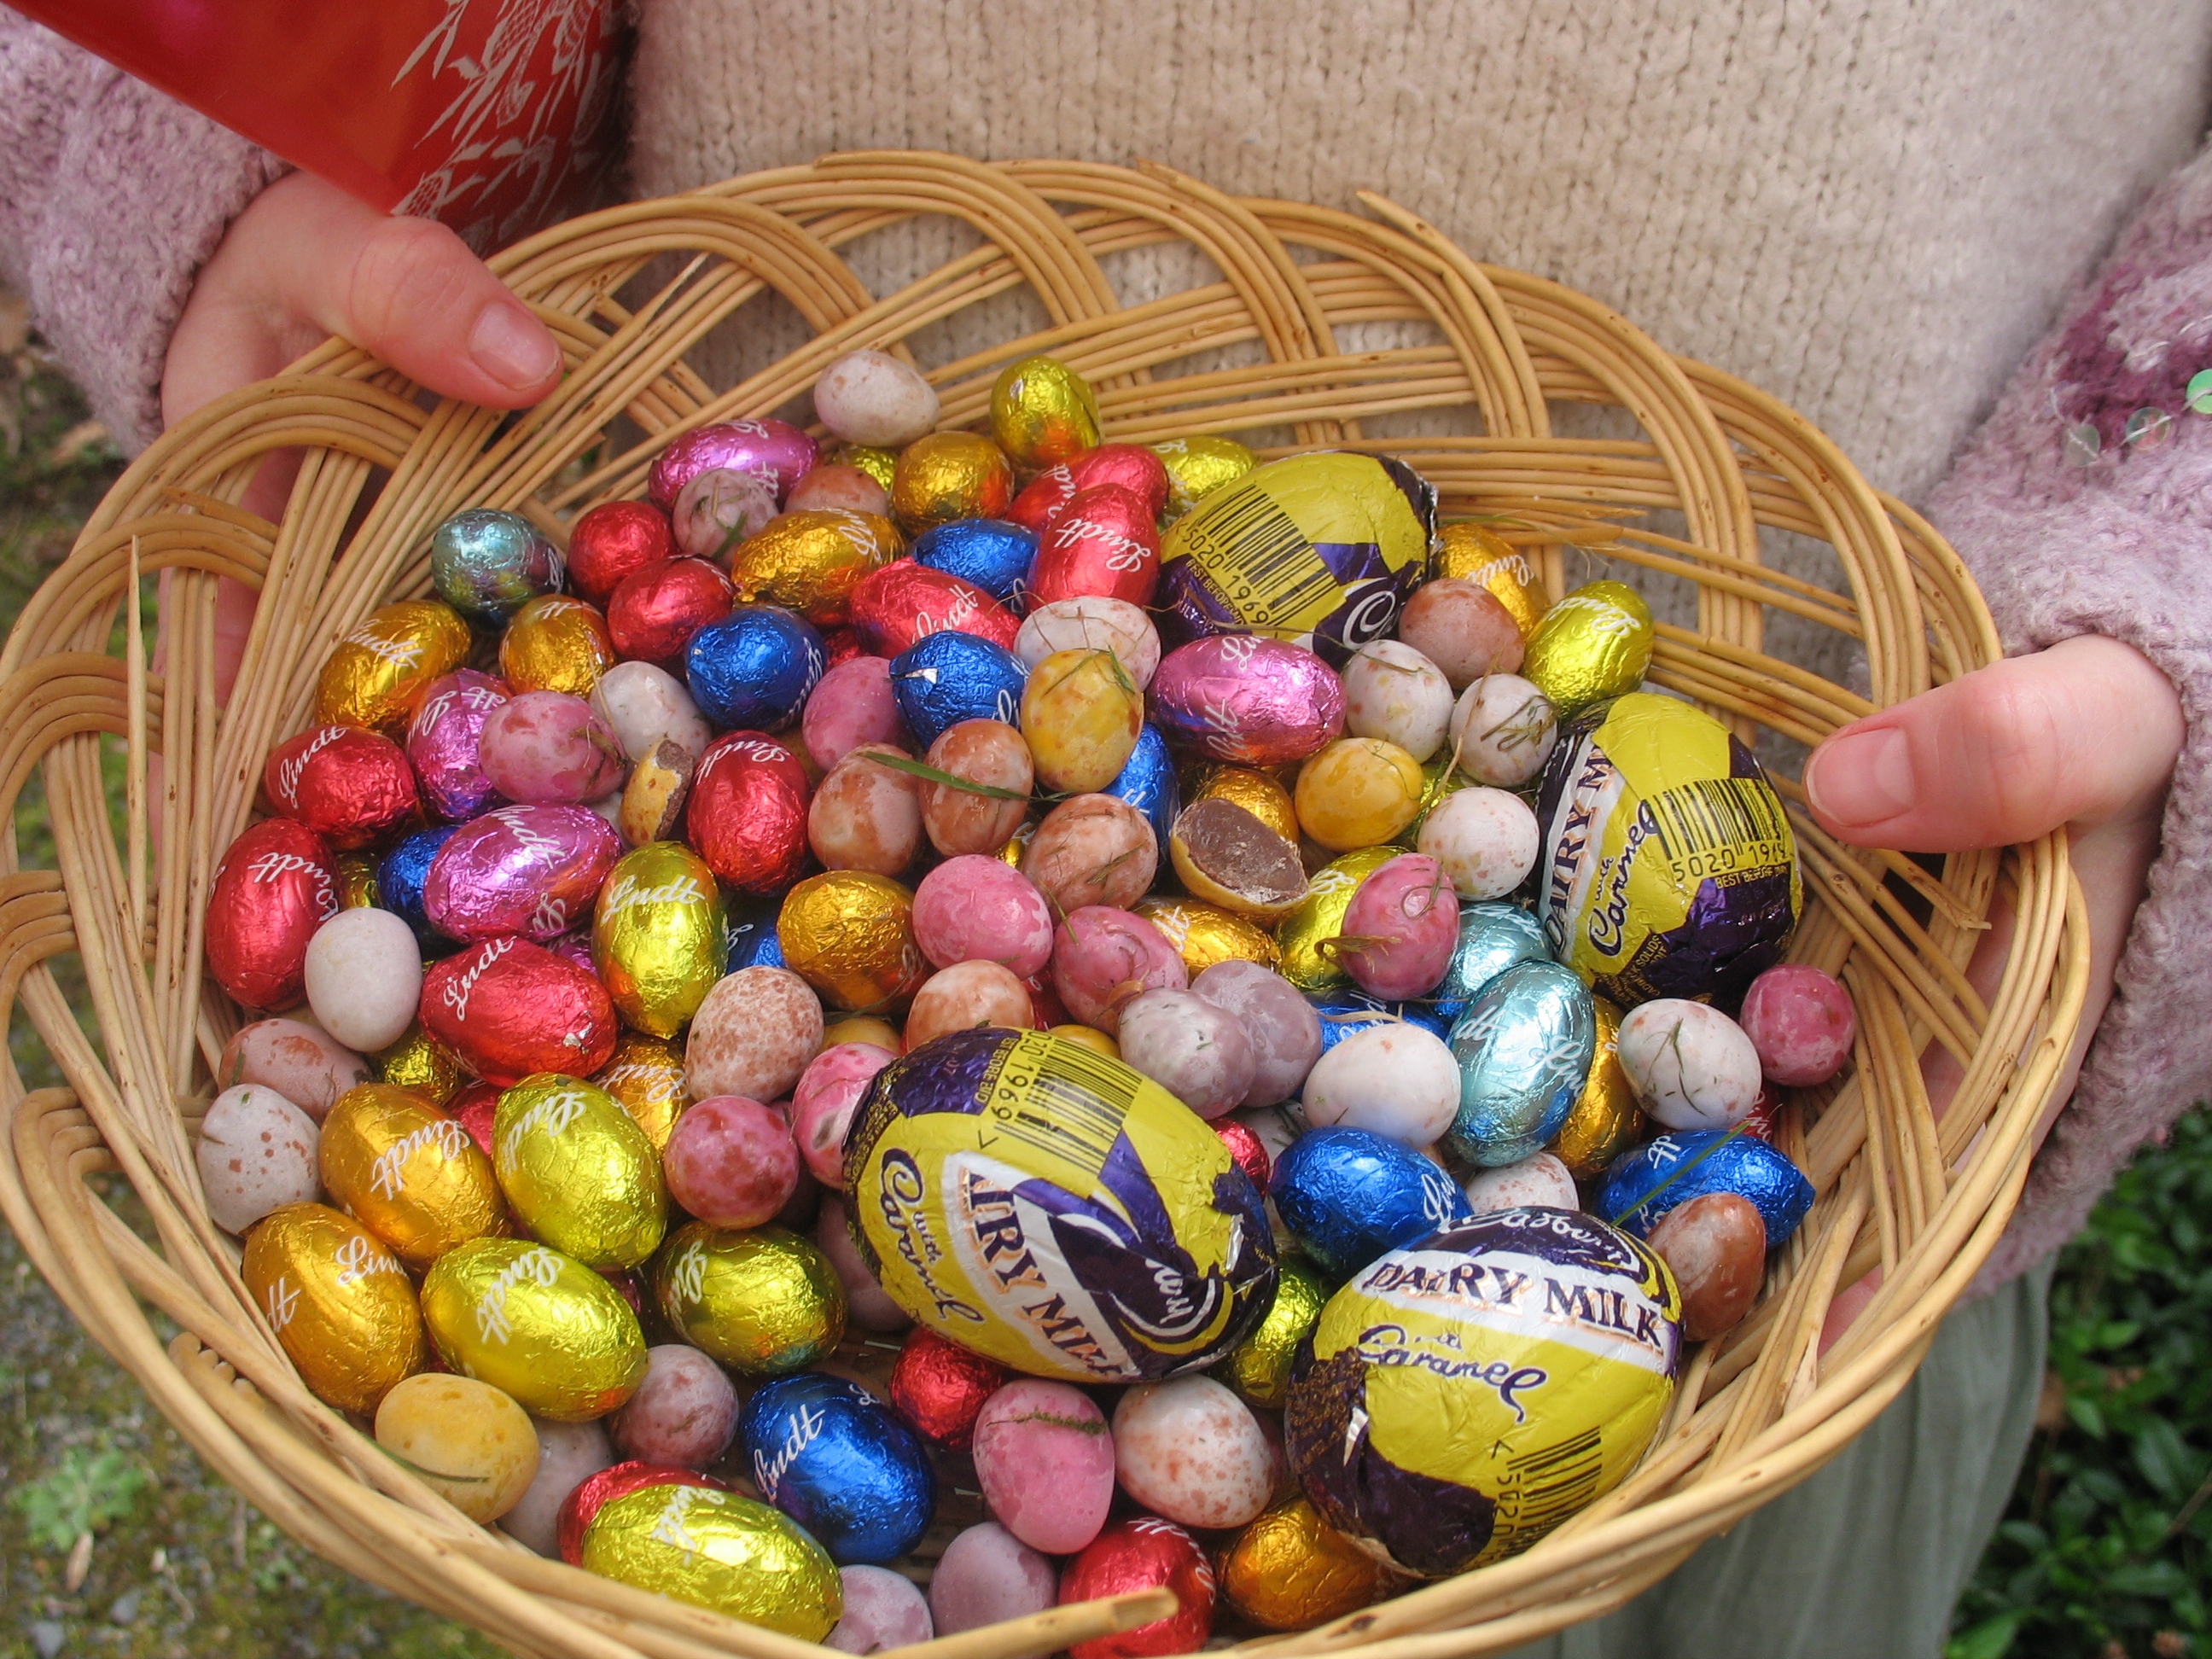 50 Best Easter Eggs Ideas